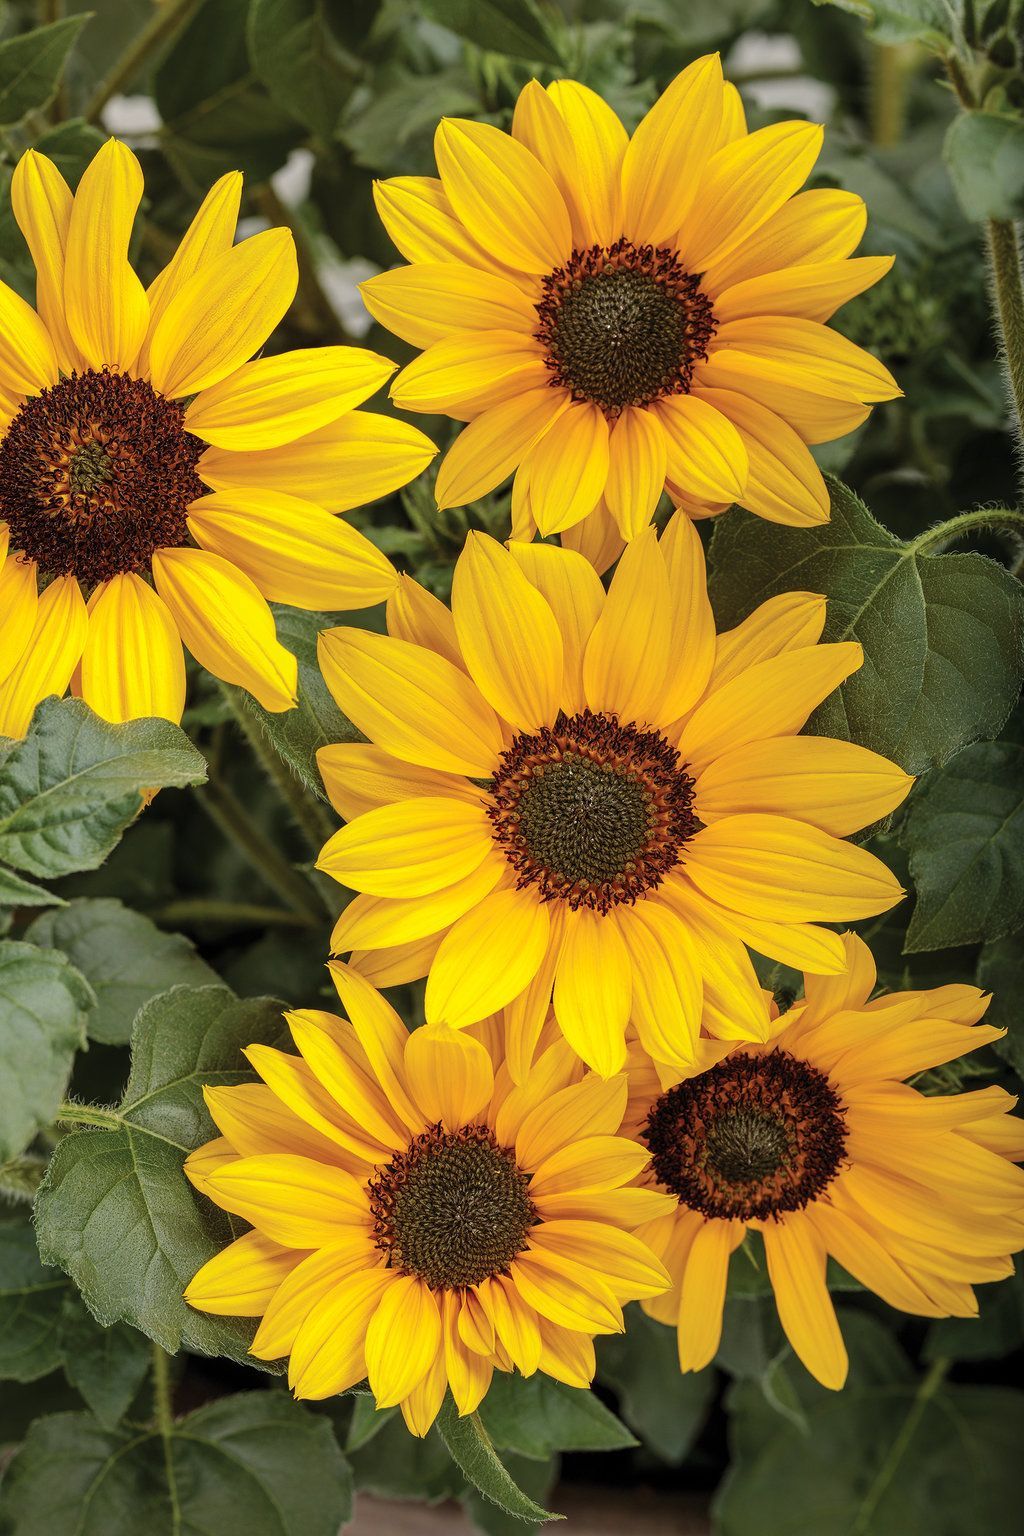 Suncredible Sunflower